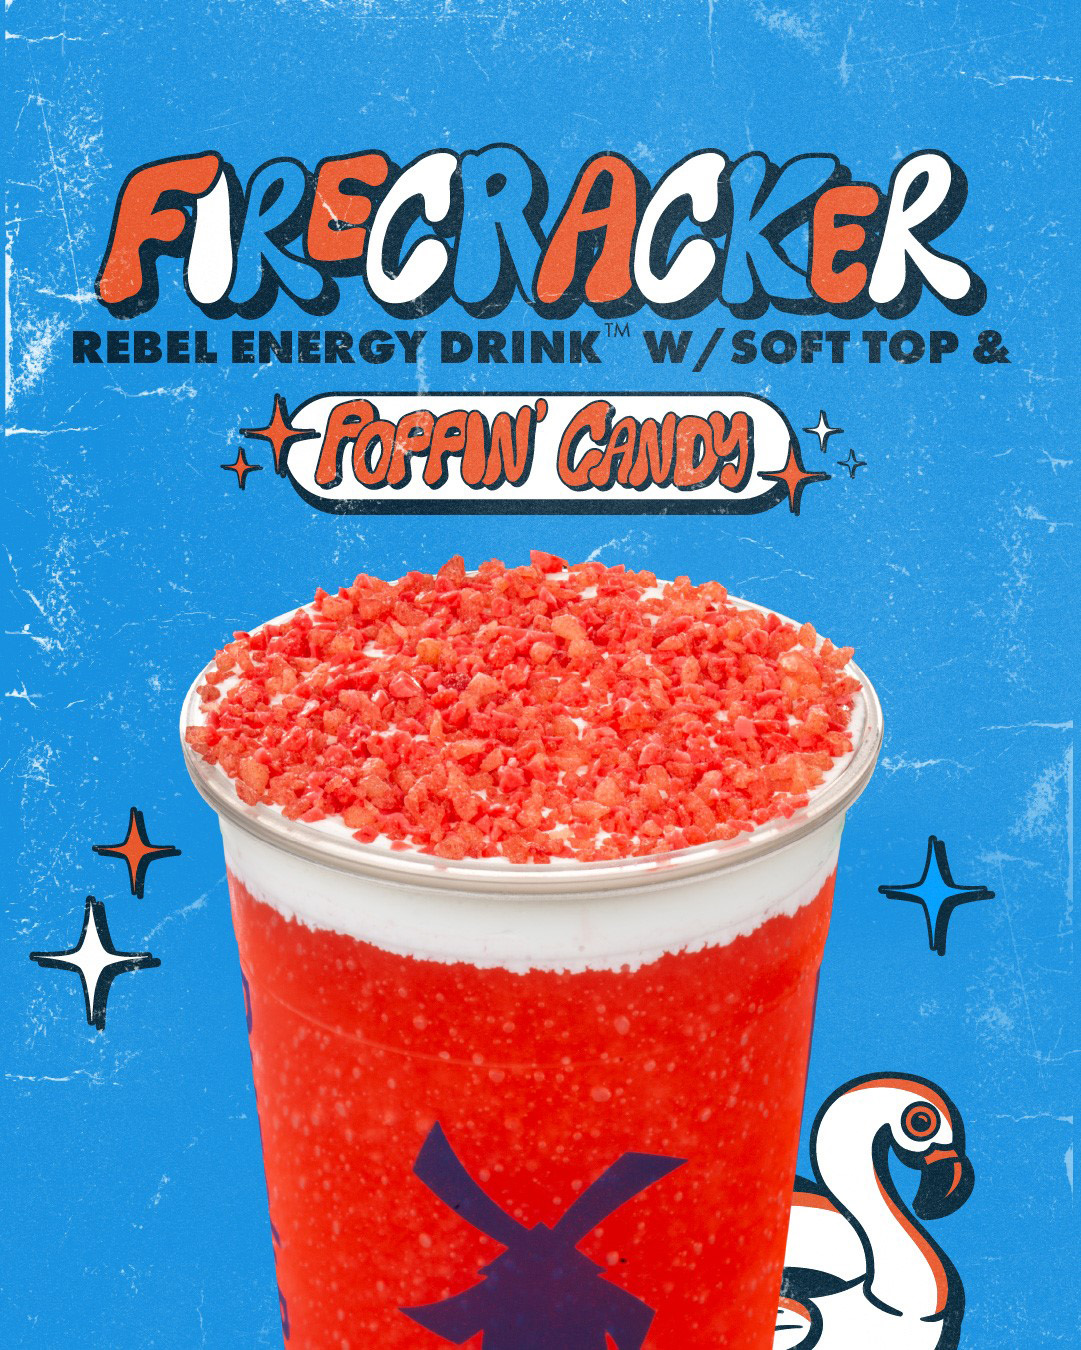 Dutch Bros Releases The Firecracker Rebel Energy Drink!